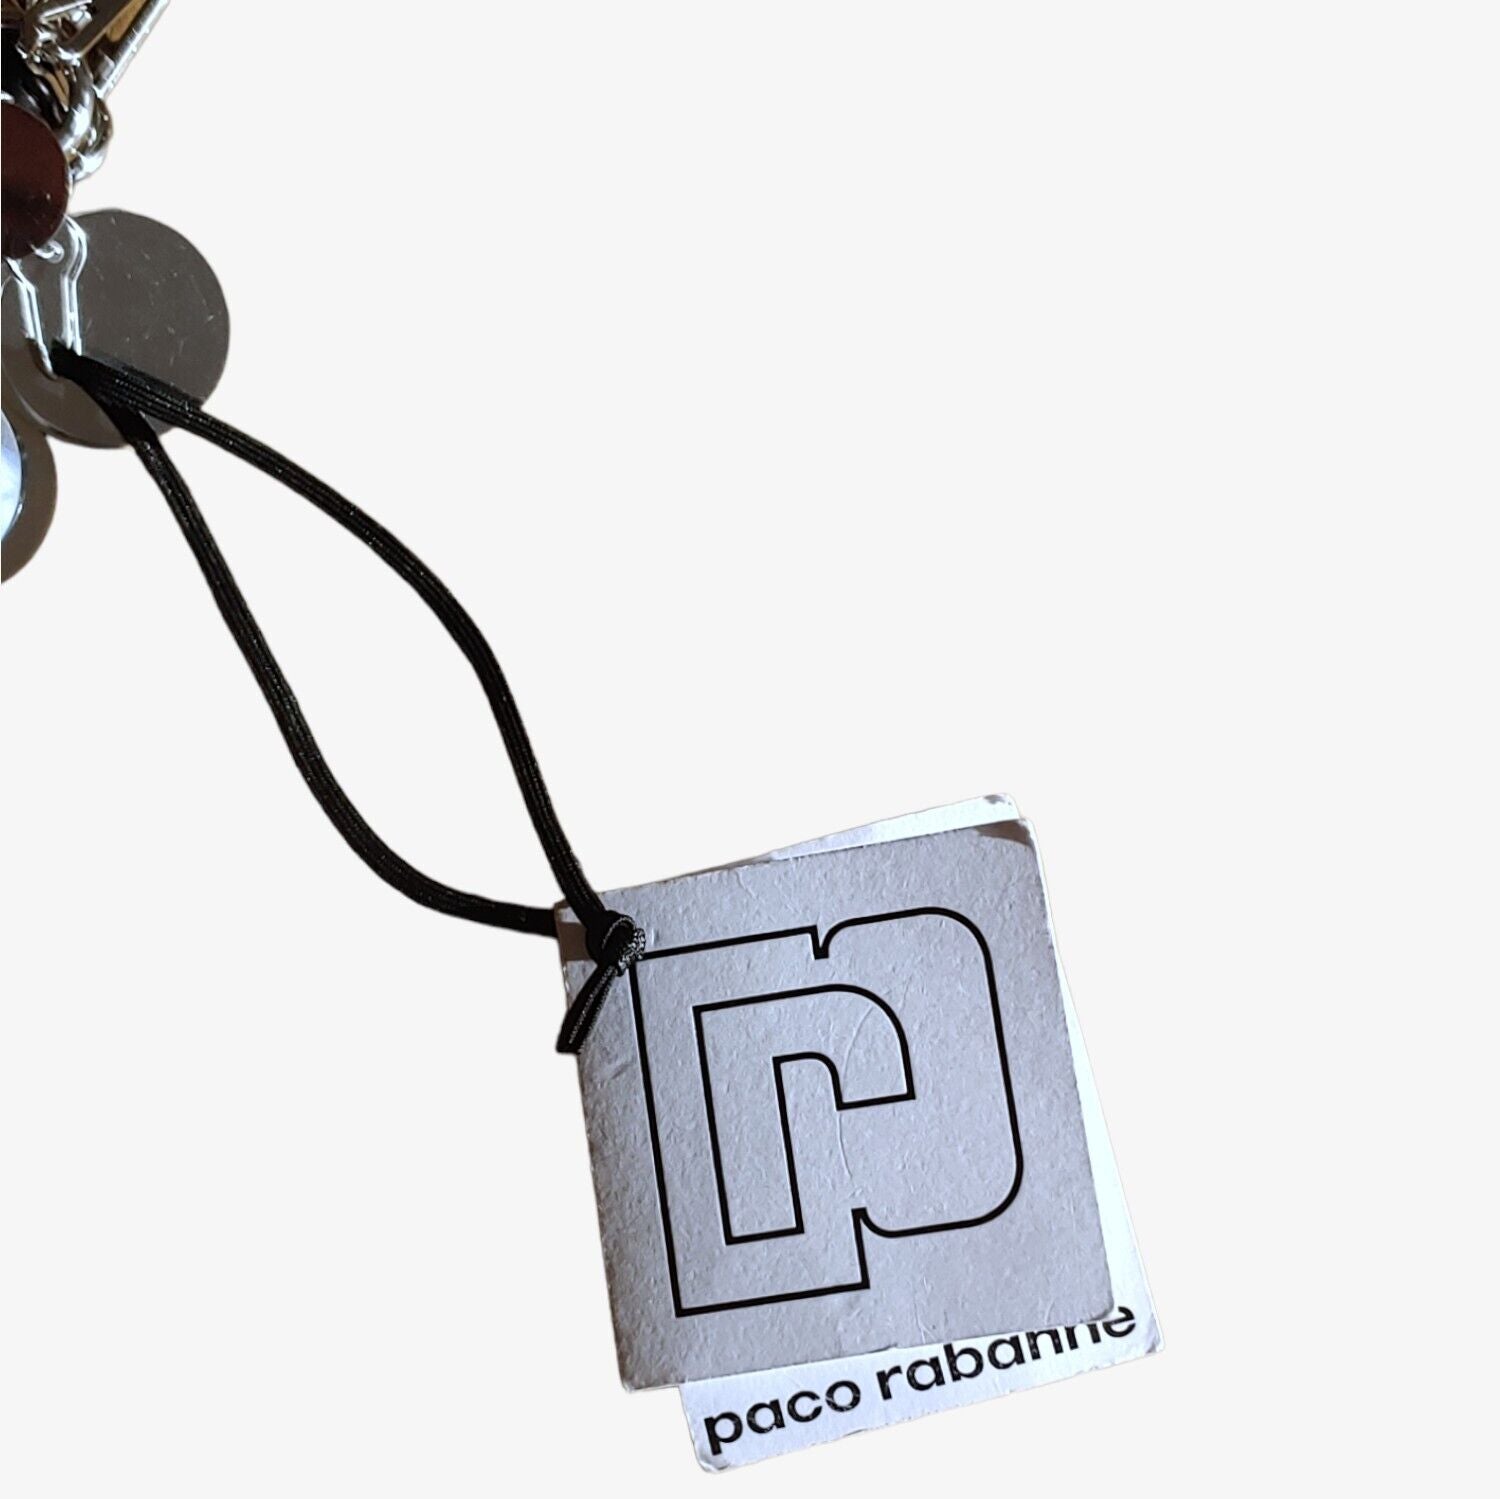 Paco Rabbane 1969 Silver Sequin Mini Crossbody Handbag Brand New With Tags Label - Casspio's Dream